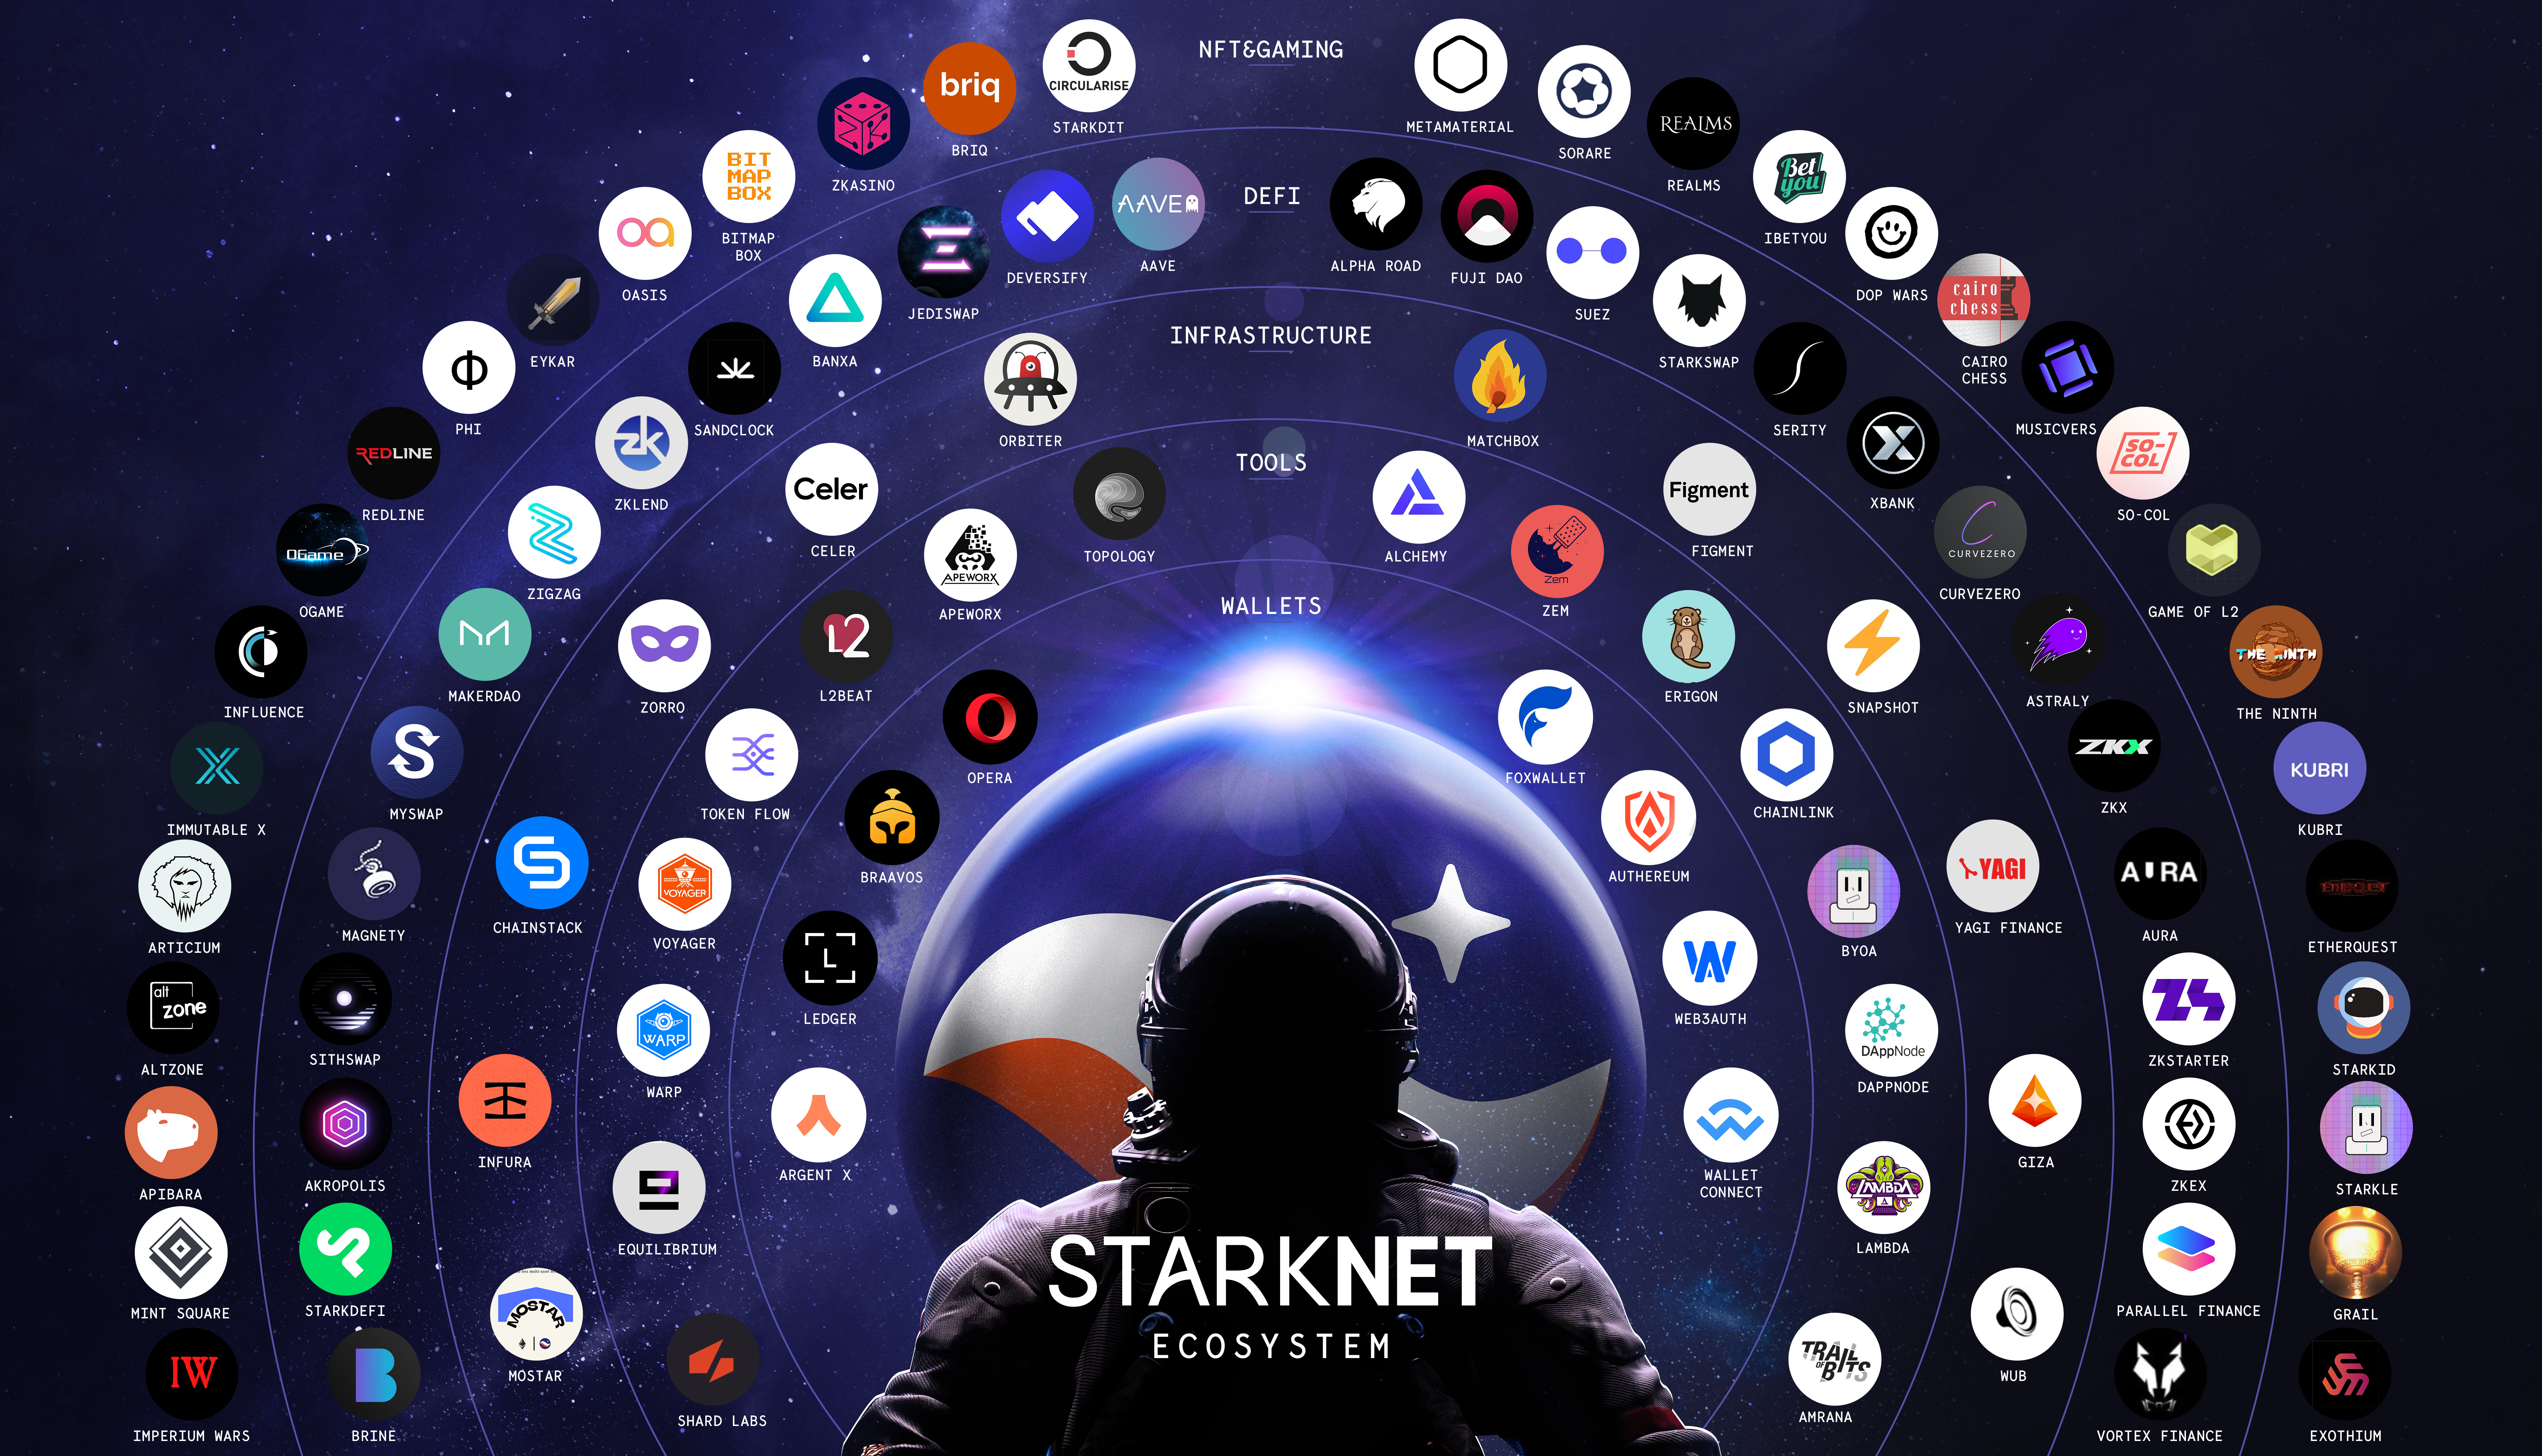 Starknet Ecosystem by https://twitter.com/Maz_eth